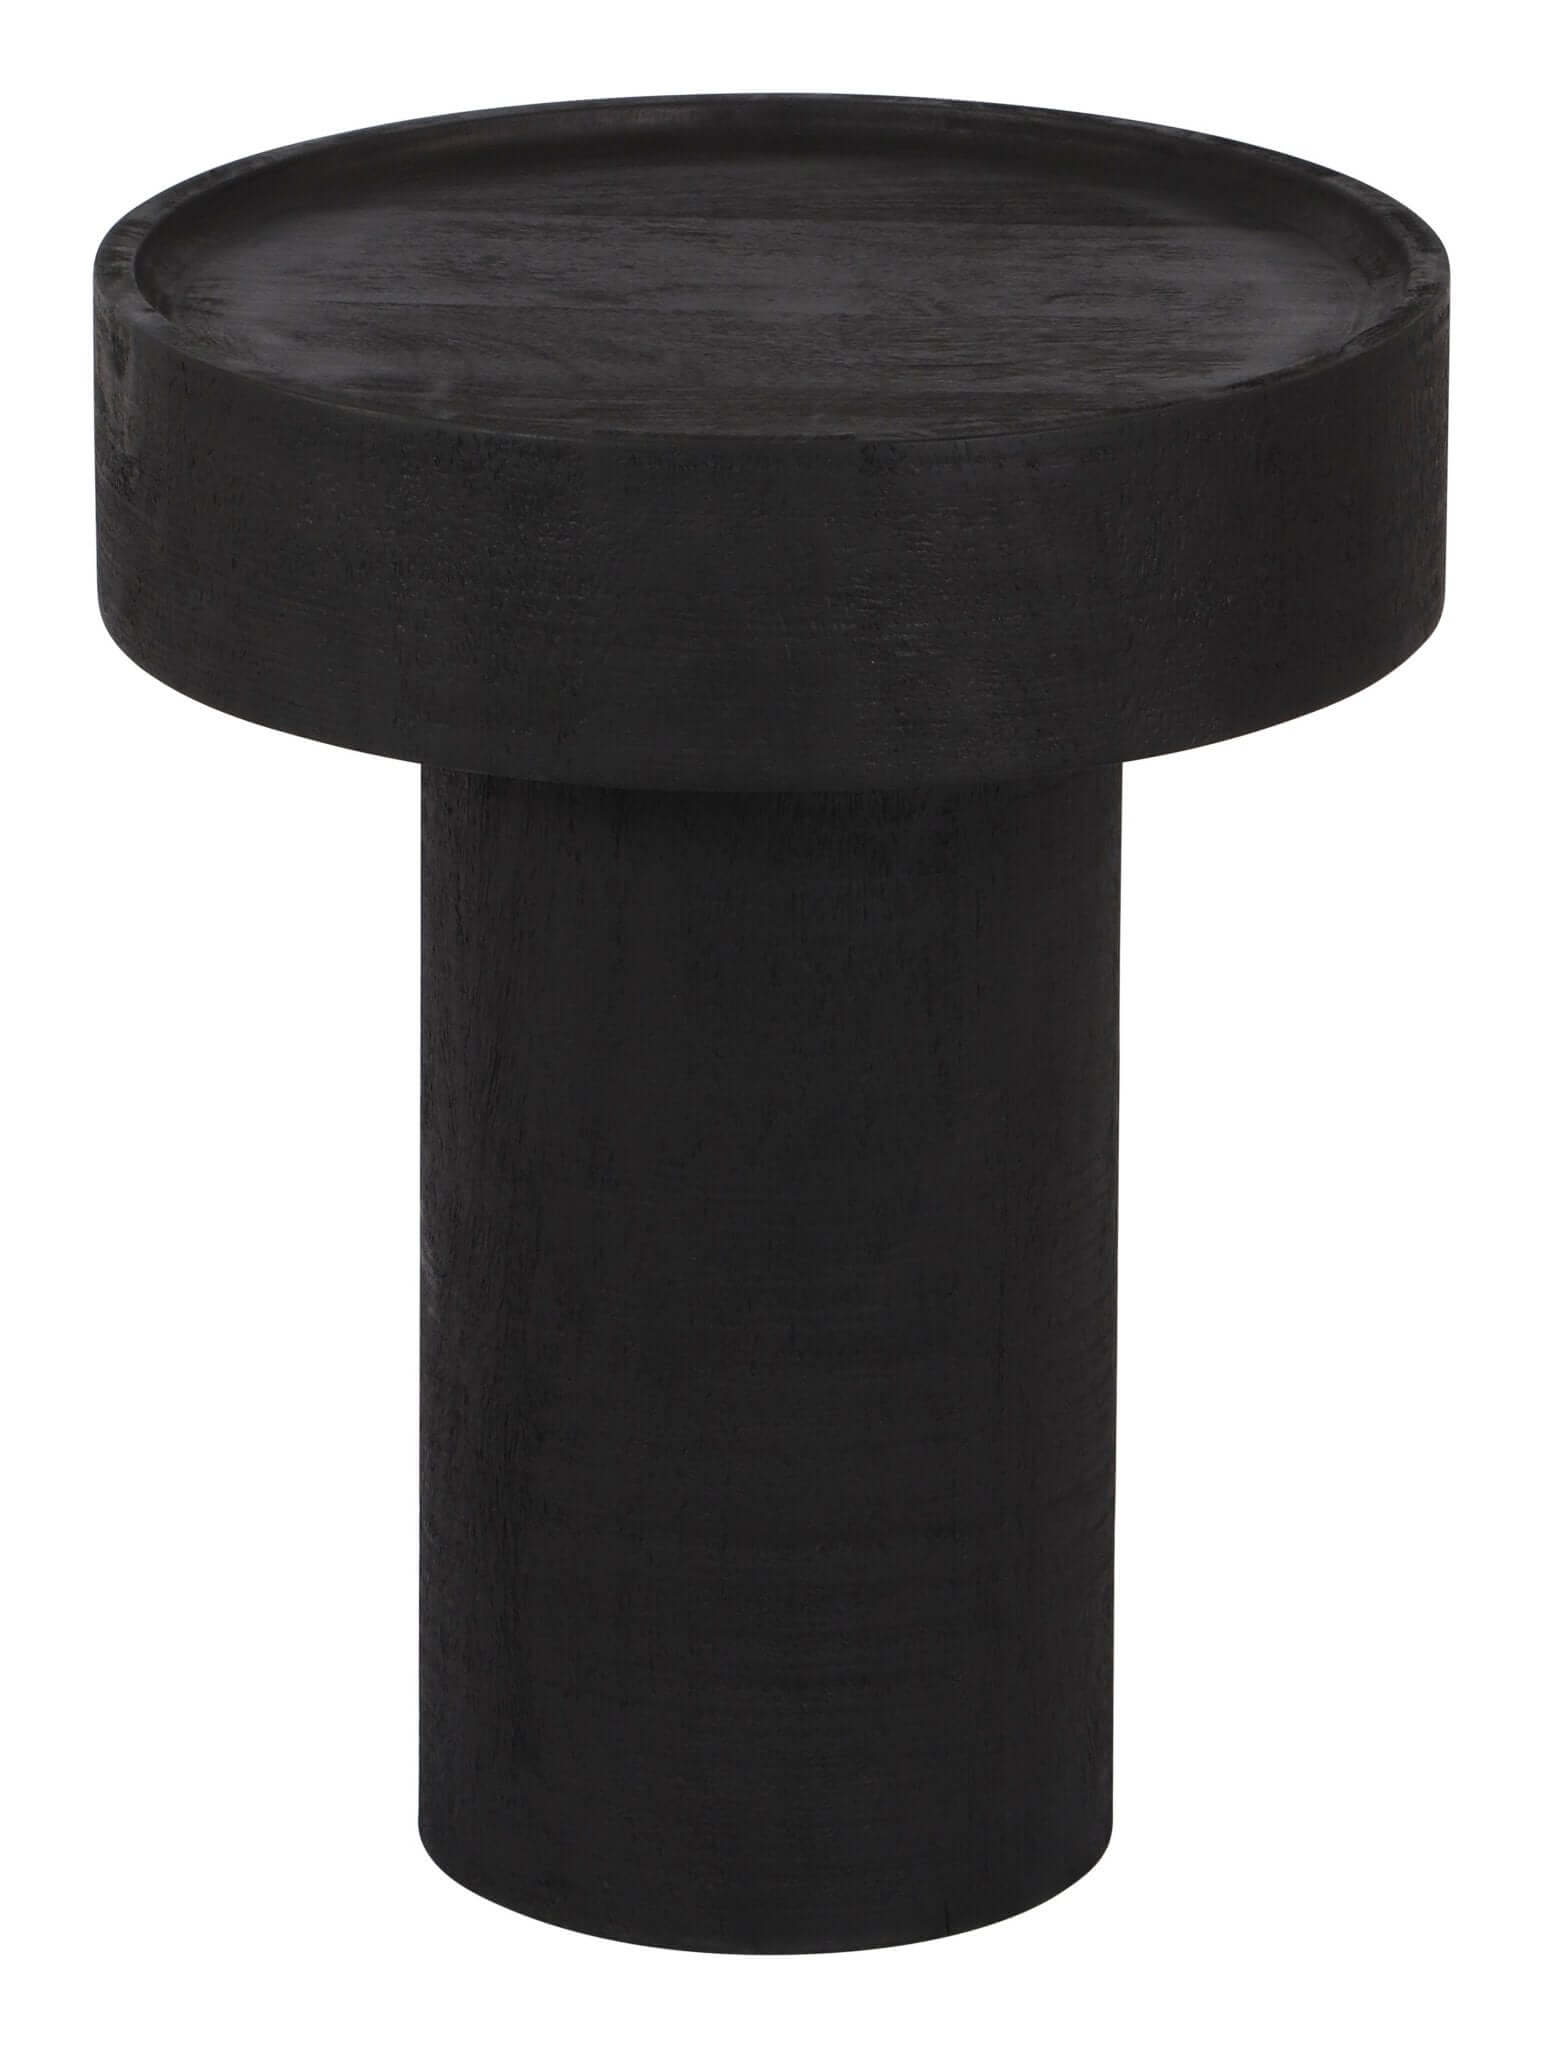 Watson Round Minimalist Mango Wood Side Table, Black - Revel Sofa 